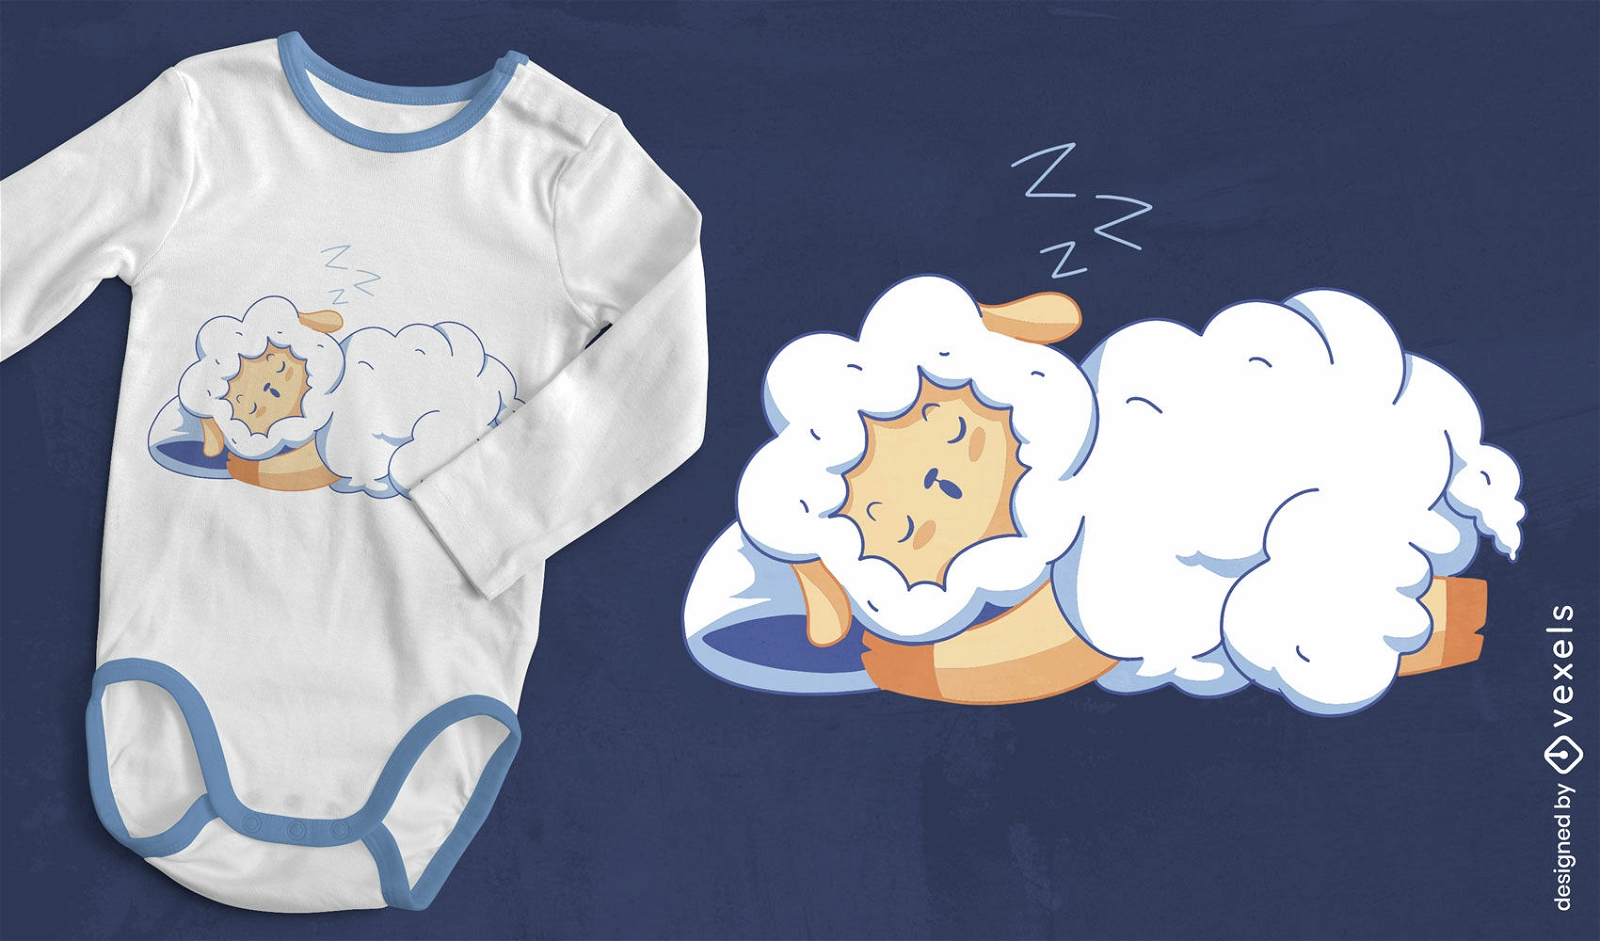 Cute sheep sleeping t-shirt design